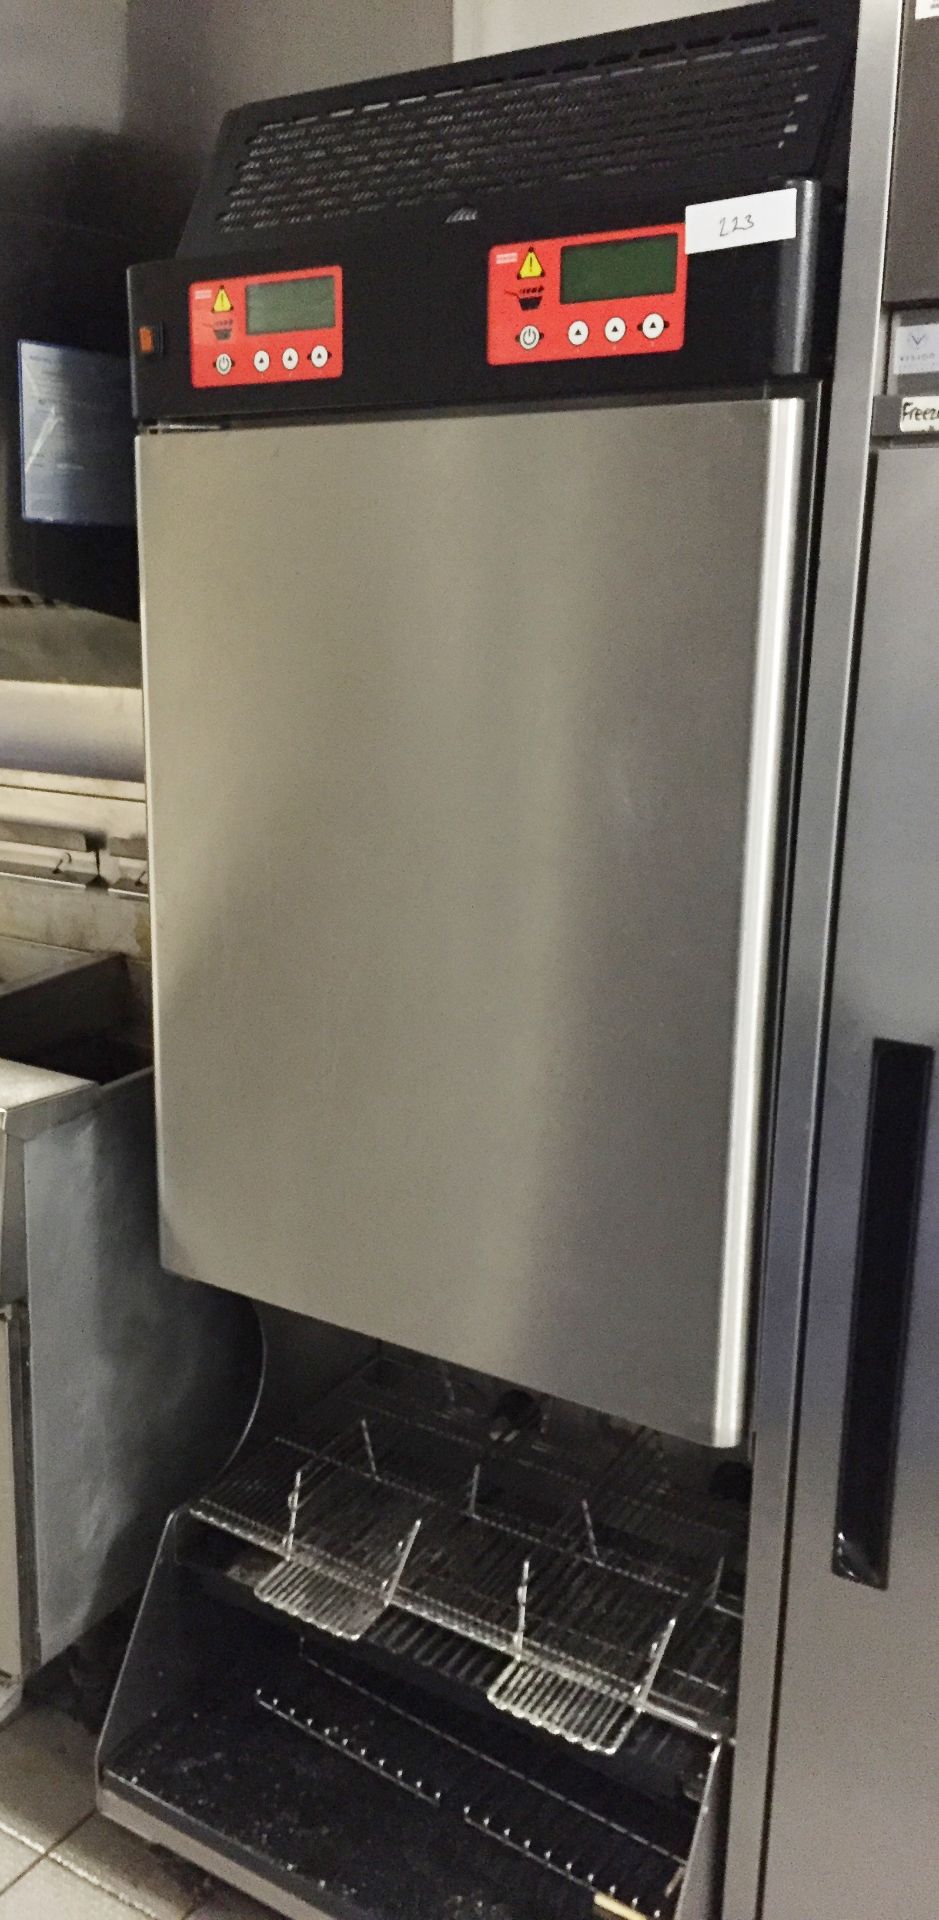 1 x Franke Frozen Food Product Dispenser – Model FD3 - Unique Dispensing system Ensuring Frozen Food